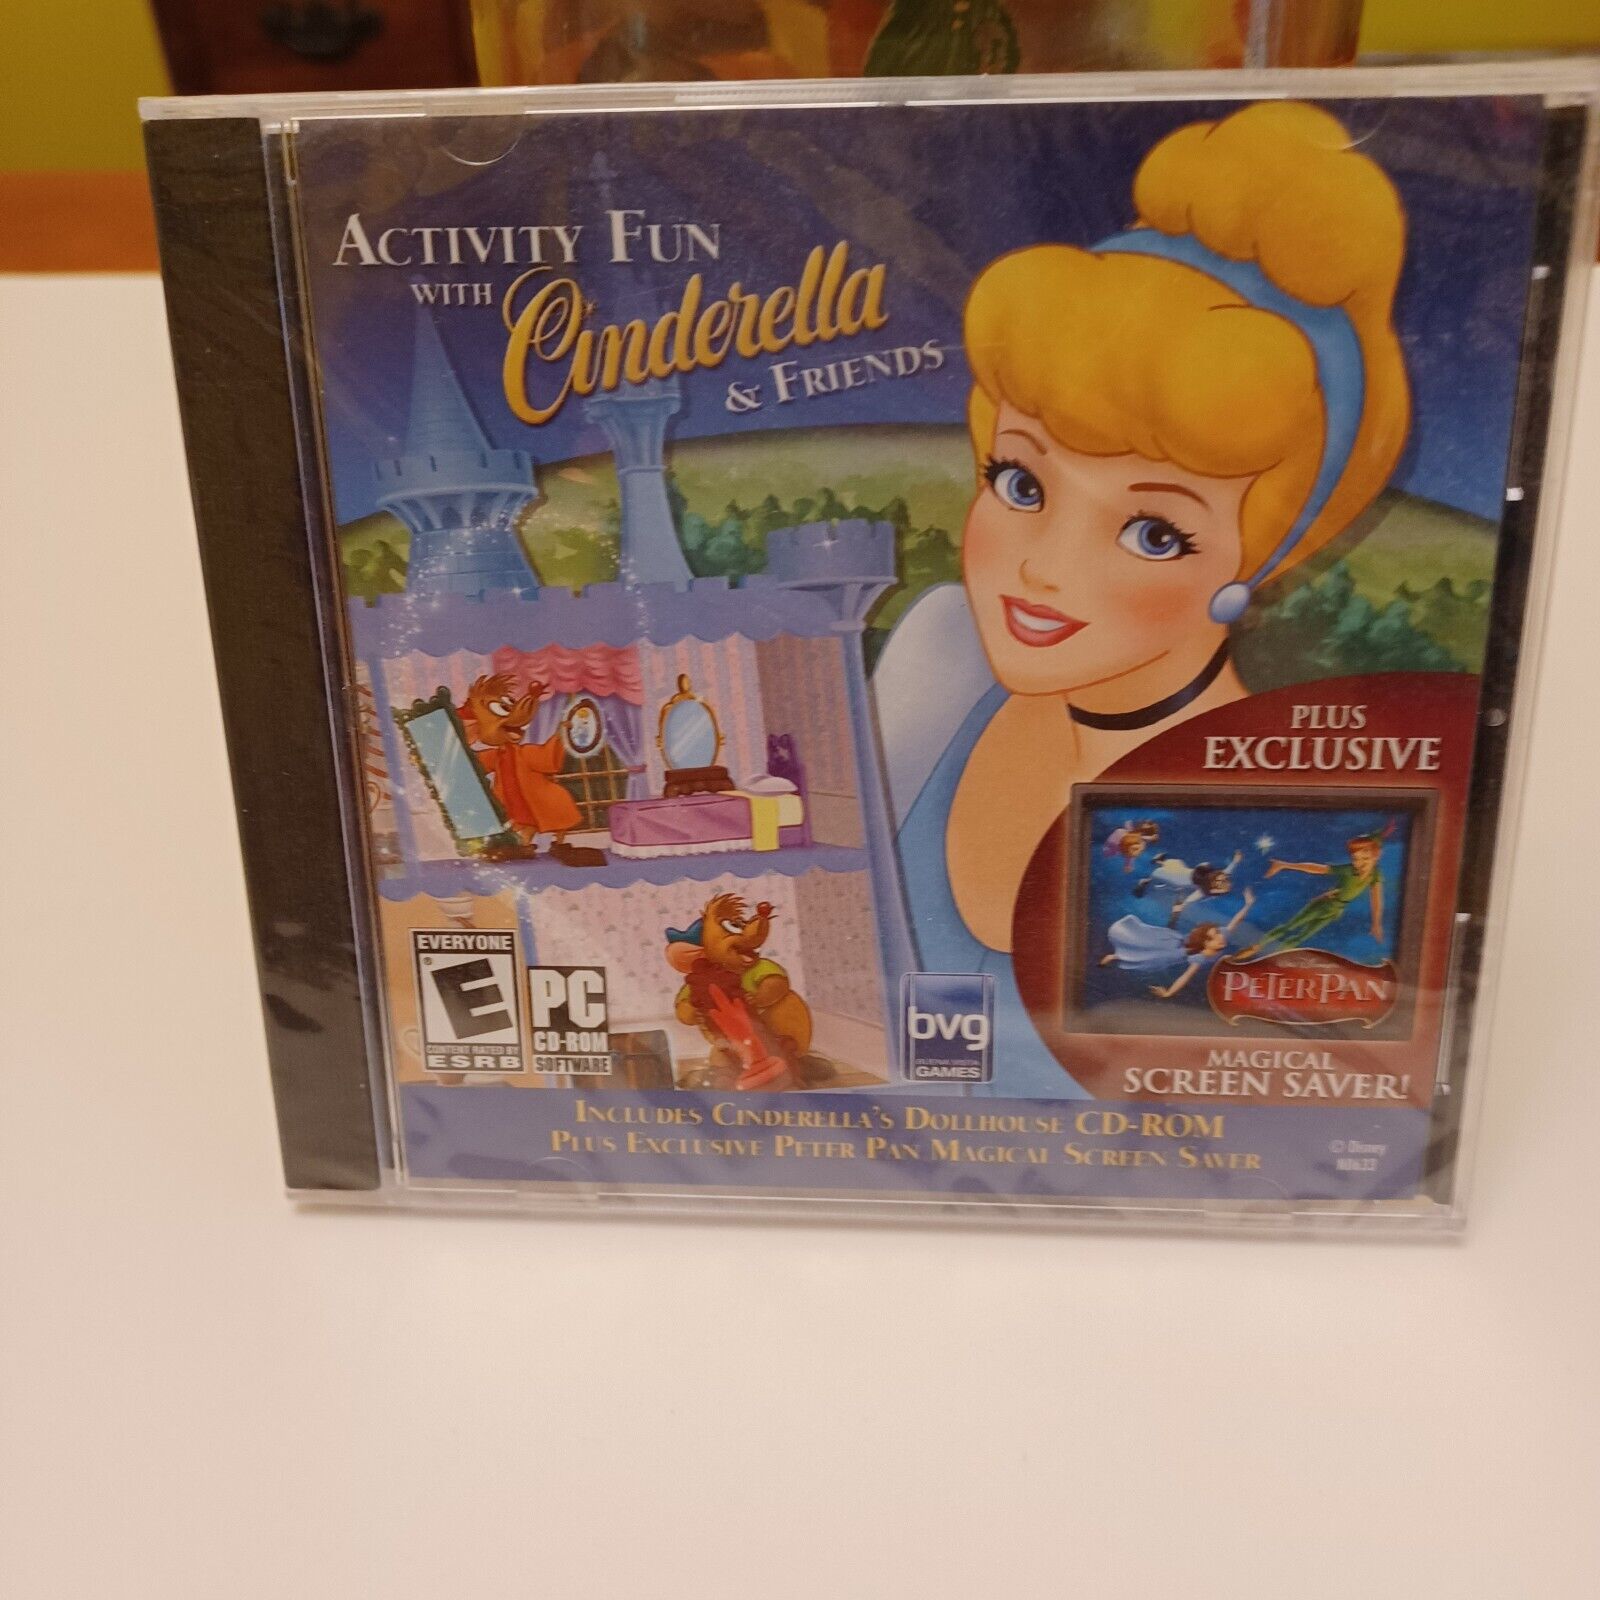 Disney Activity Fun Cinderella & Friends PC CD-ROM BVG W/ Peter Pan Screen Saver